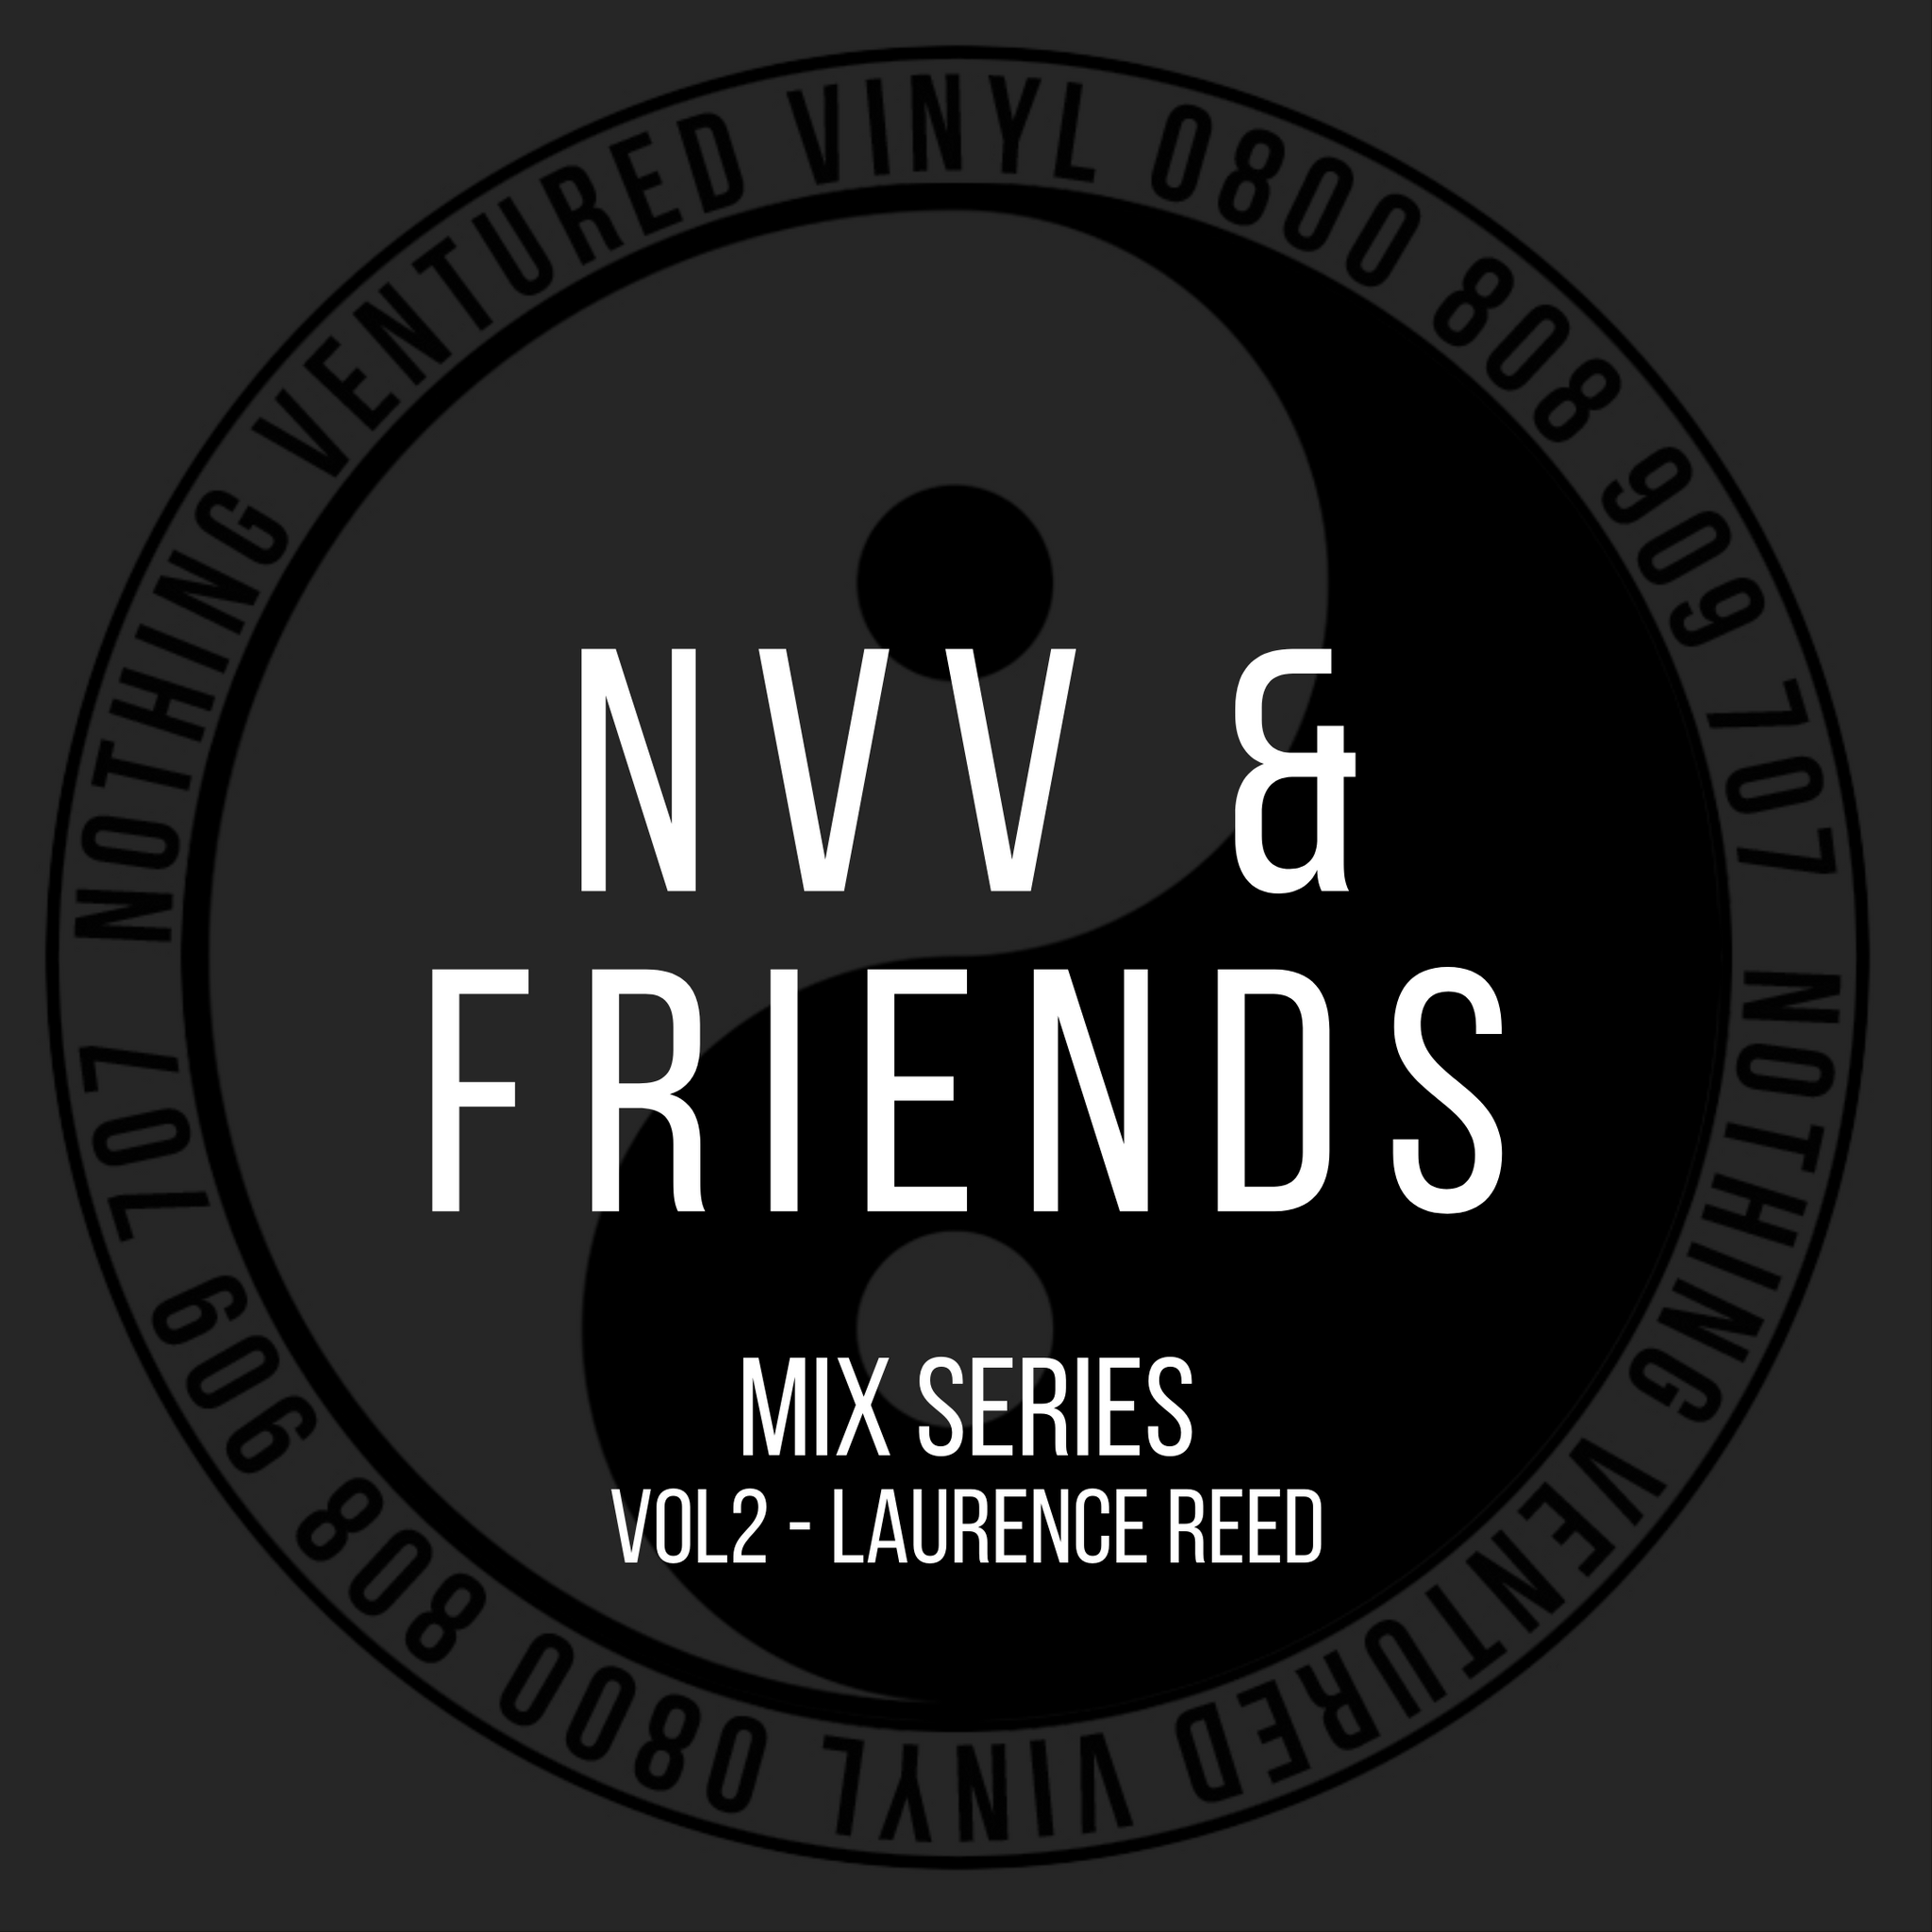 NVV & FRIENDS VOL2 - LAURENCE REED - MURGE RECORDINGS